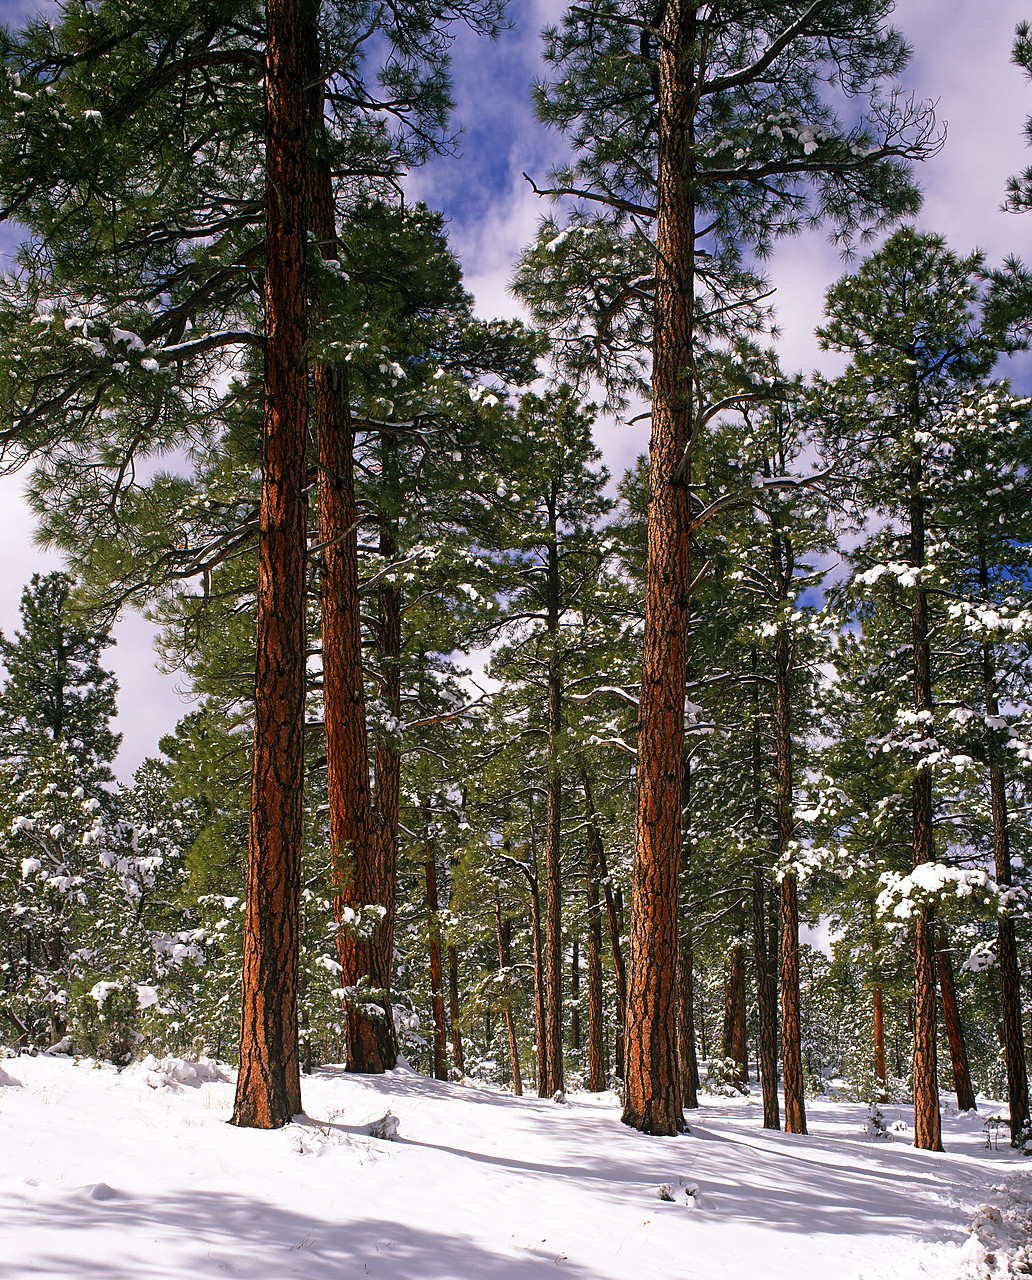 #980783-1 - Ponderosa Pine Trees in Winter, Grand Canyon National Park, Arizona, USA